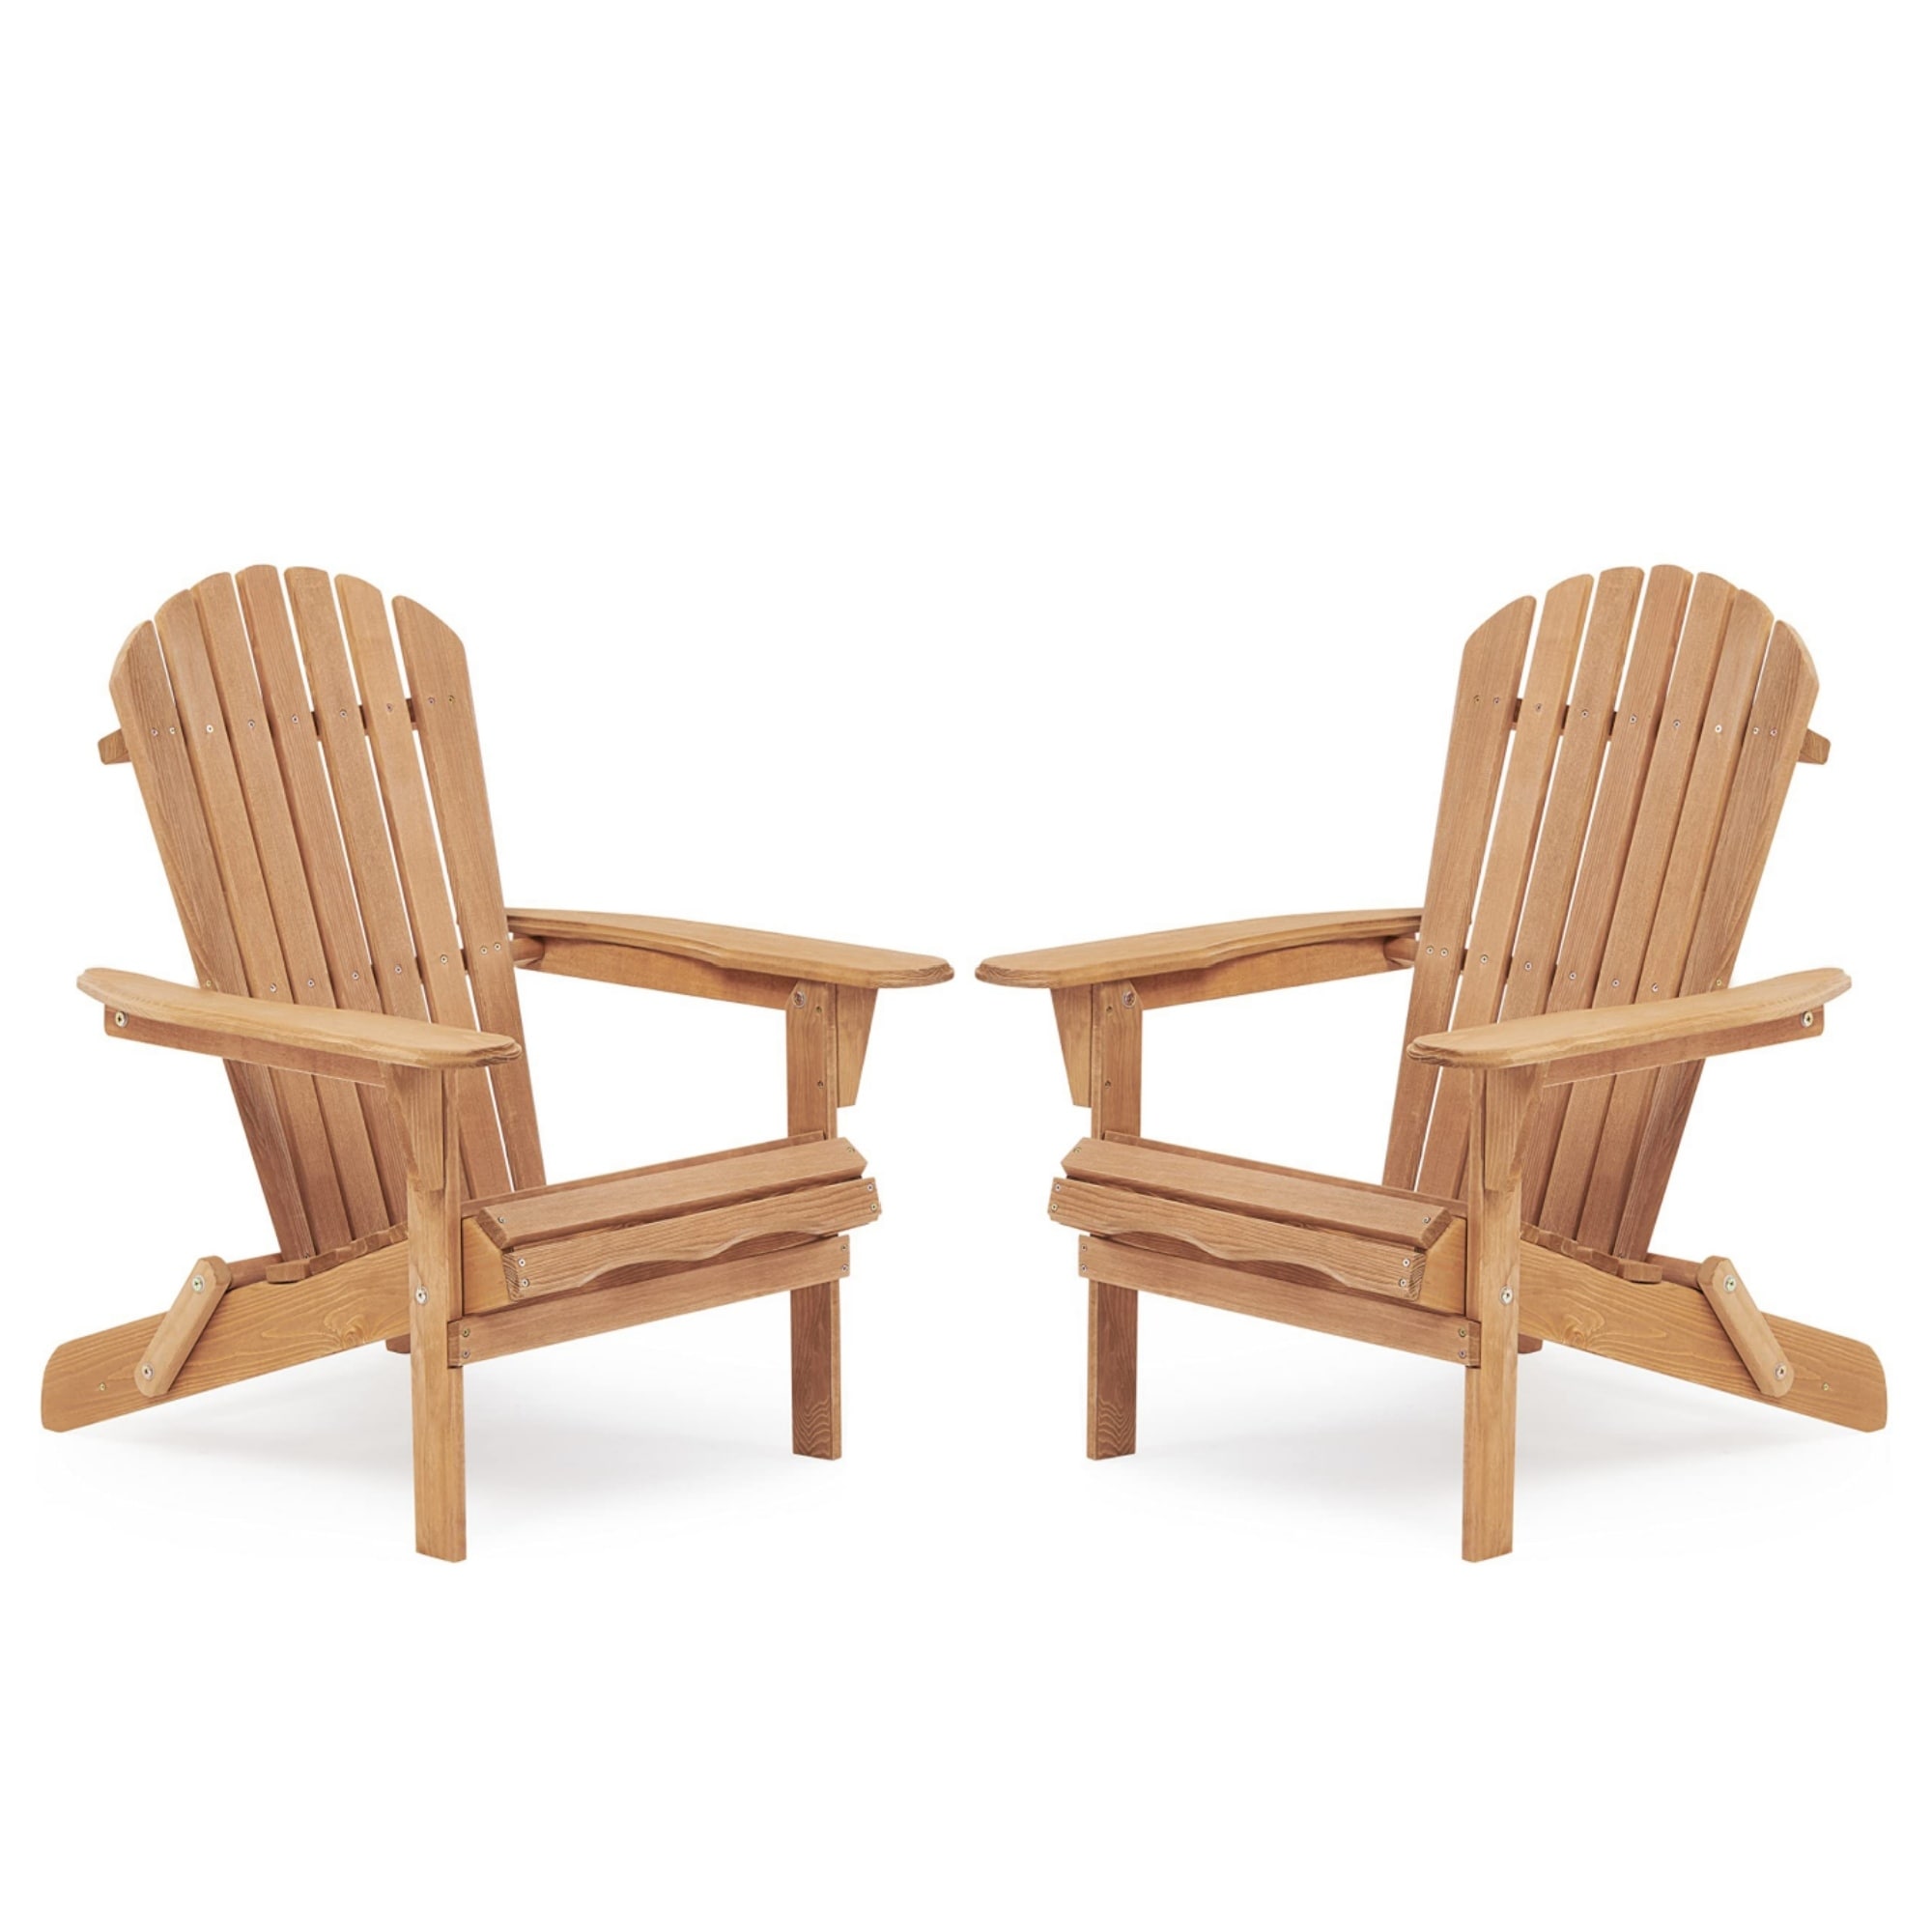 2 Pcs Outdoor Garden Solid Cedar Wood Folding Lounge Adirondack Chair